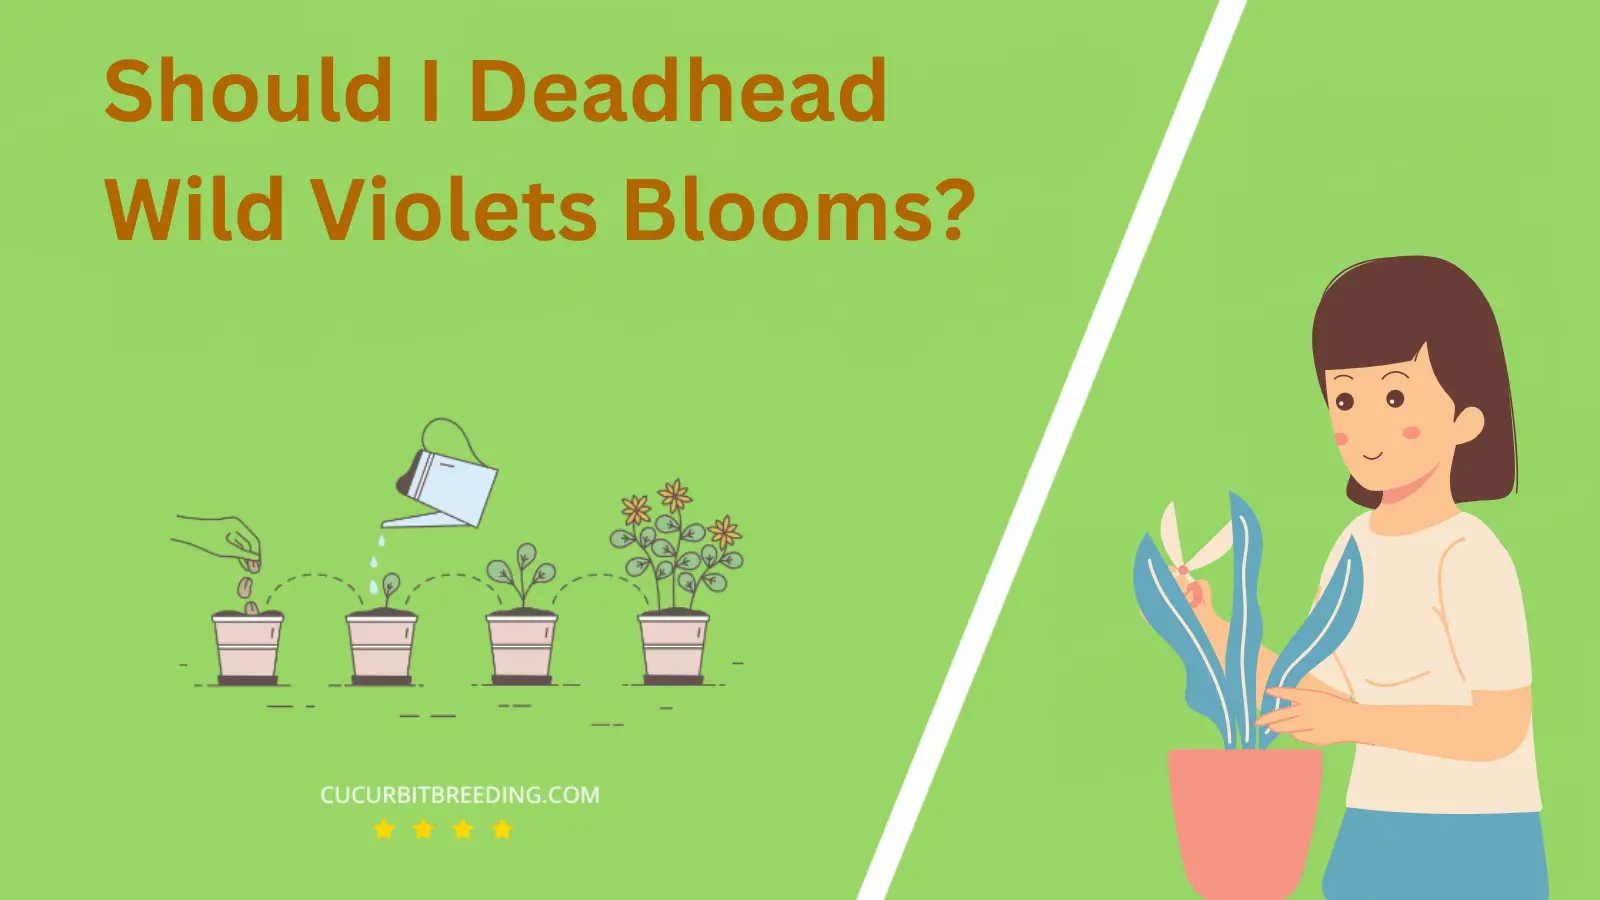 Should I Deadhead Wild Violets Blooms?